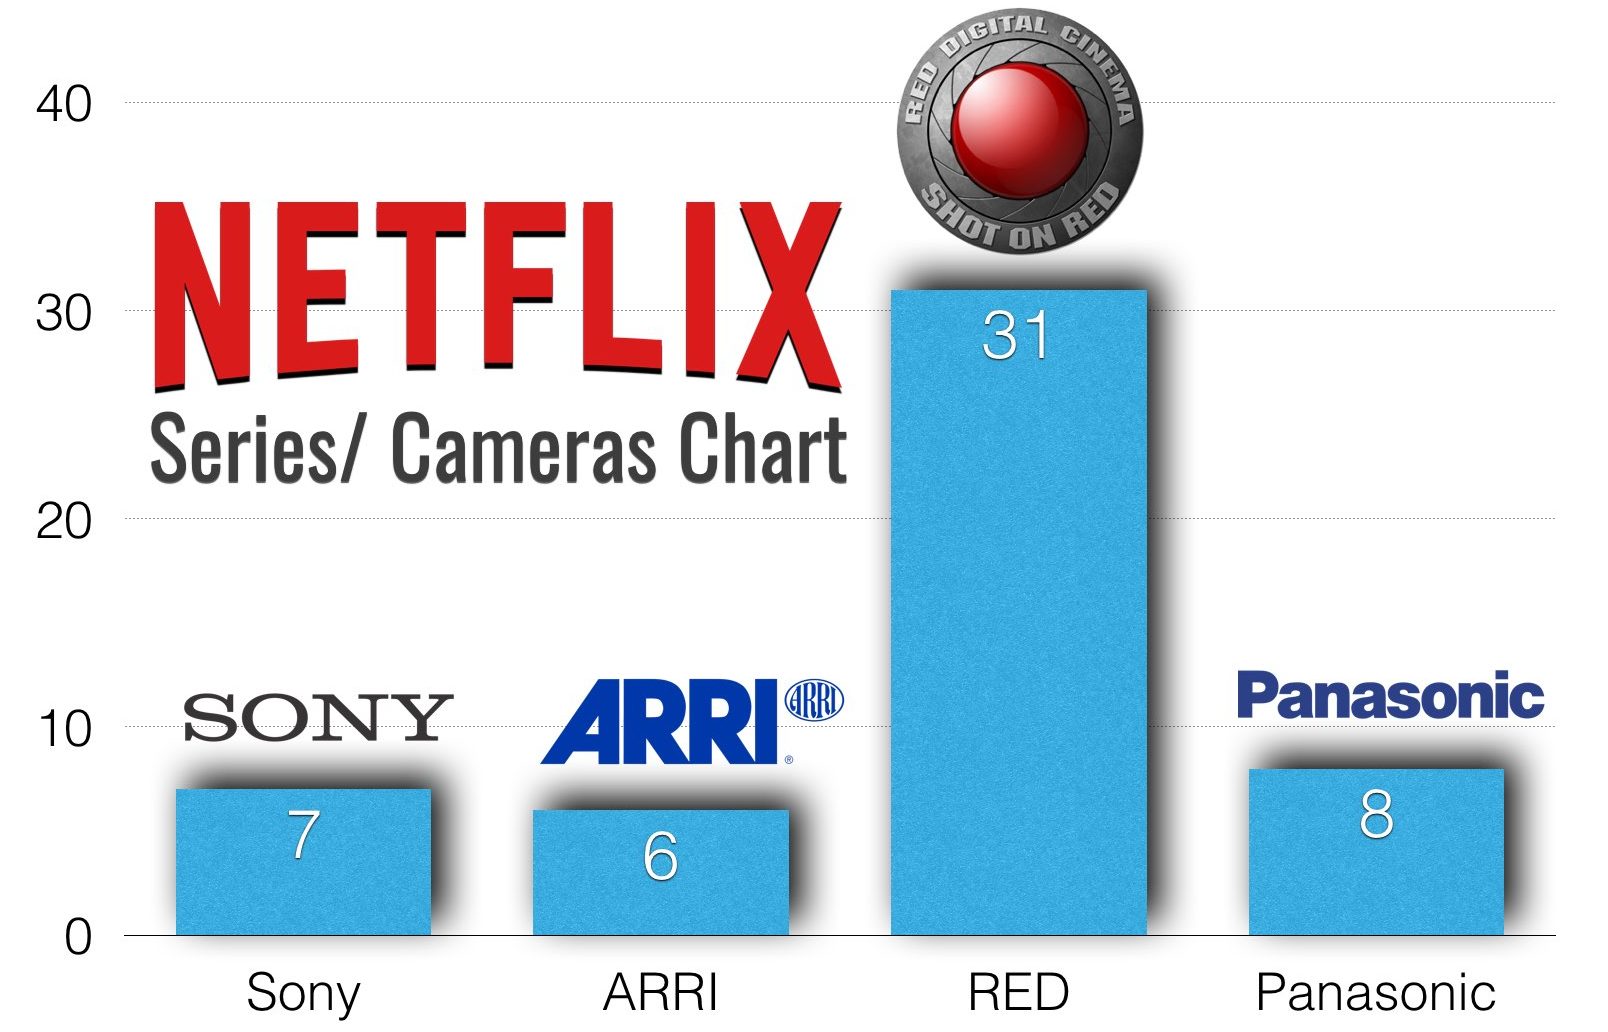 Netflix Series/ Cameras General Chart Based on 42 highest ranked Netflix series